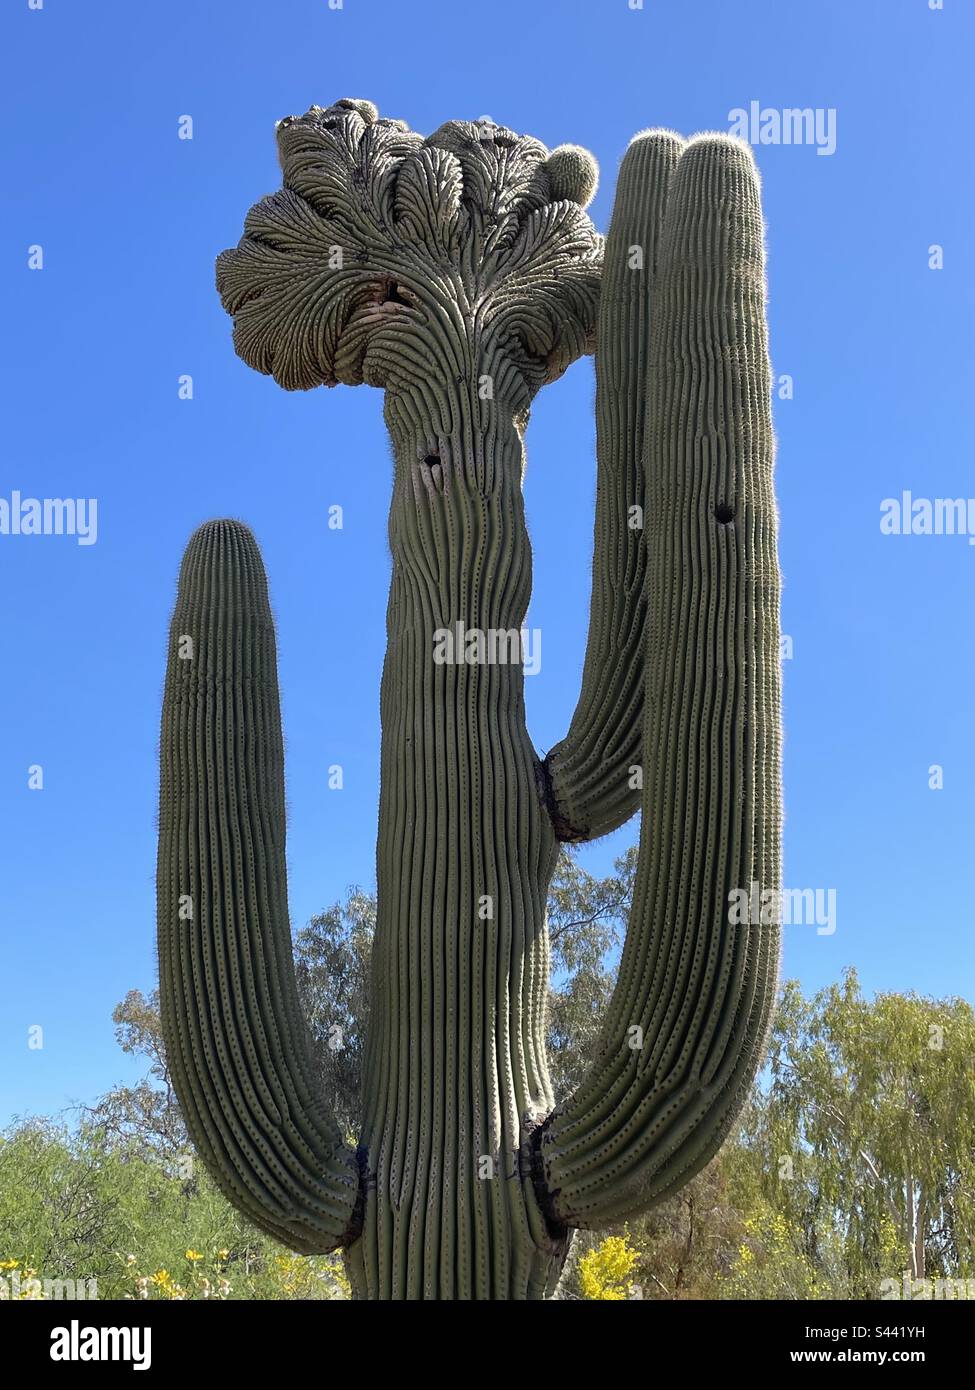 Giant Crested Saguaro cactus, brilliant blue sky, Sonoran desert, Phoenix, Arizona Stock Photo